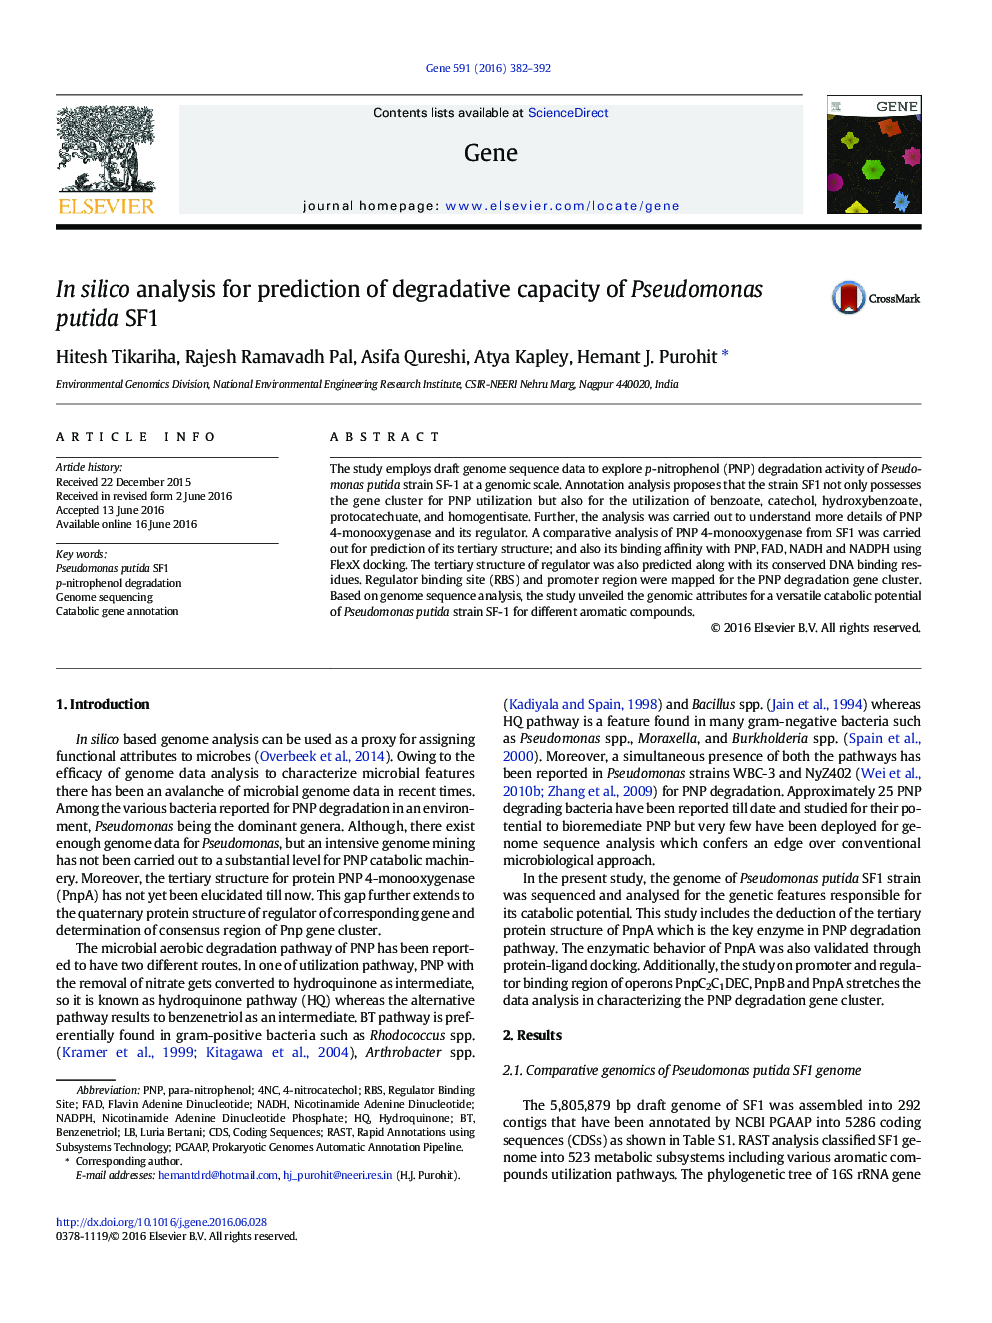 In silico analysis for prediction of degradative capacity of Pseudomonas putida SF1